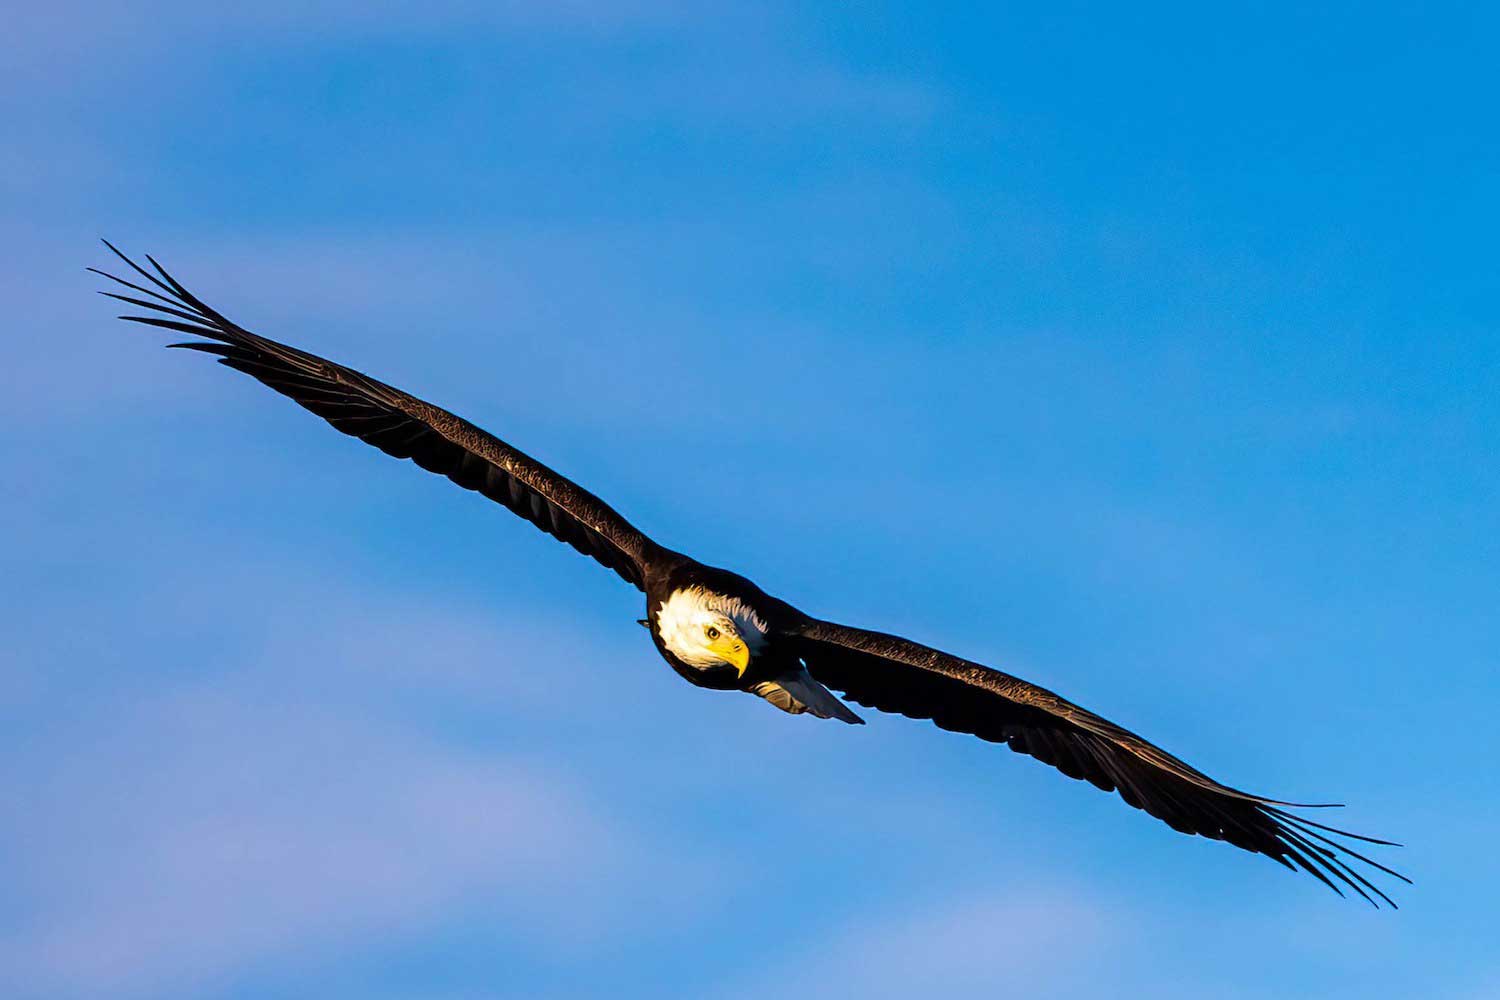 A bald eagle in flight.